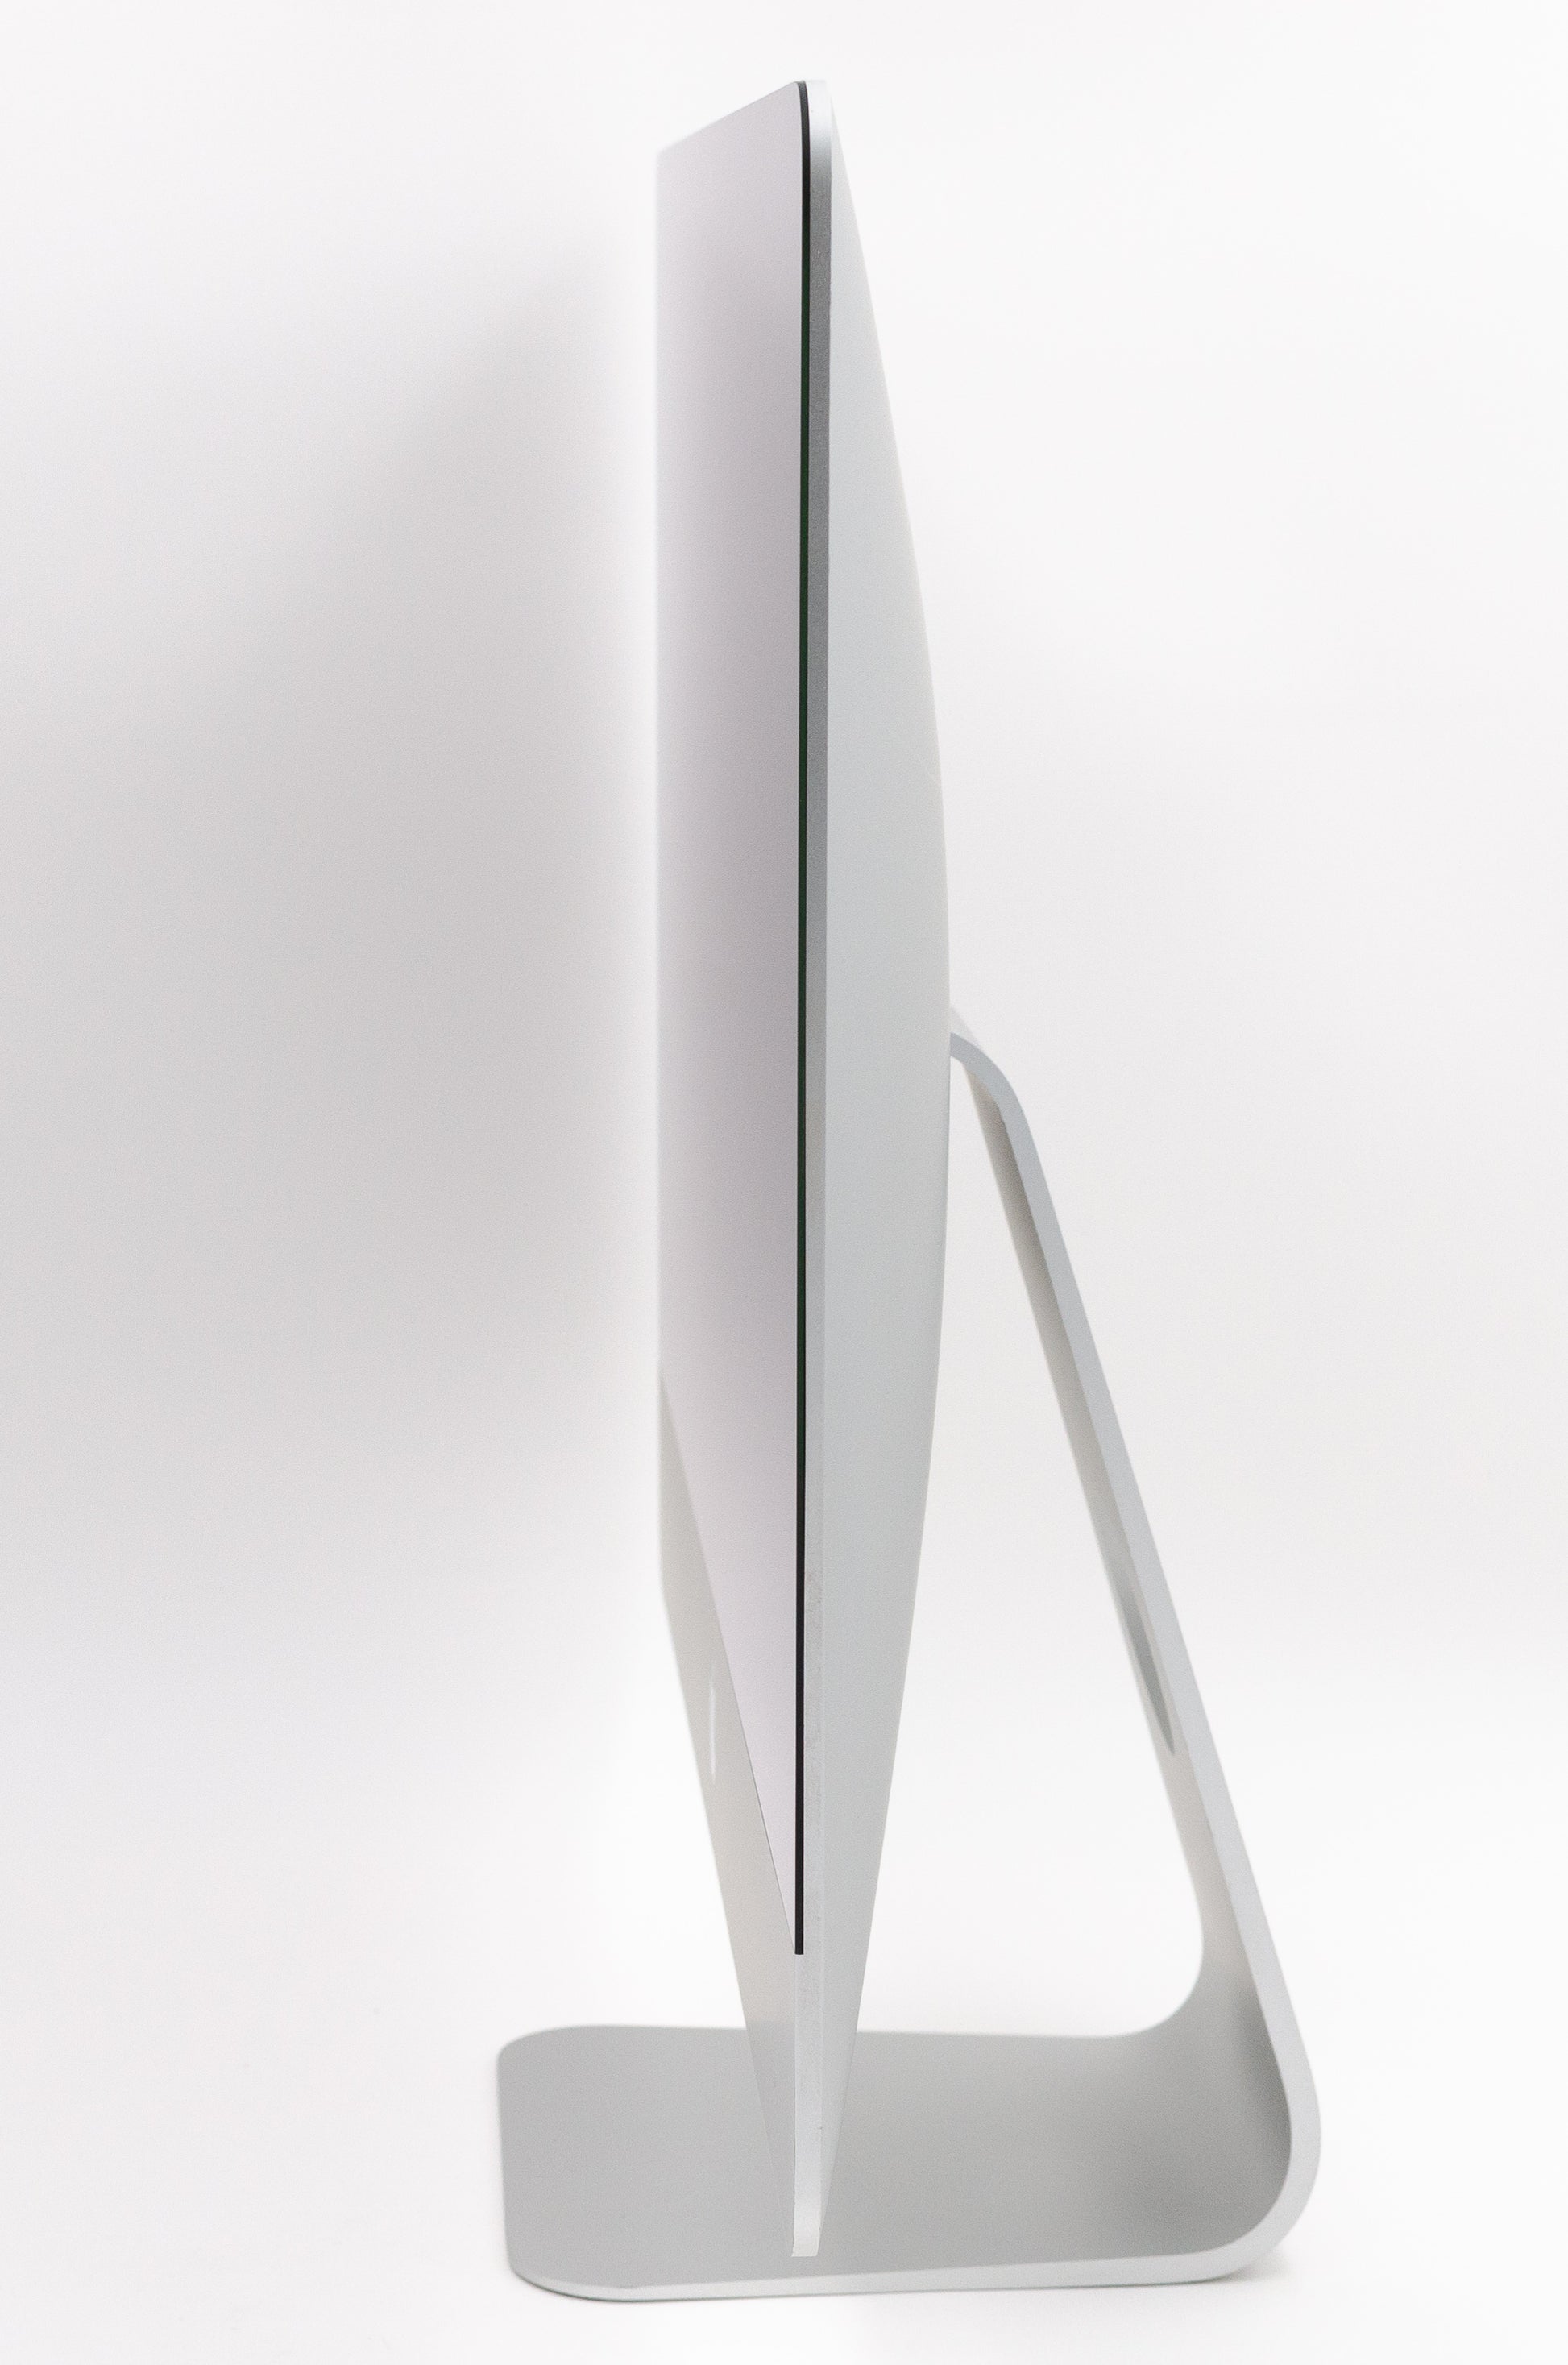 apple-late-2015-21.5-inch-imac-ultra-thin-a1418-aluminum-dci5 - 1.6ghz, 8gb ram, pro 6000 - 1.5gb gpu-3